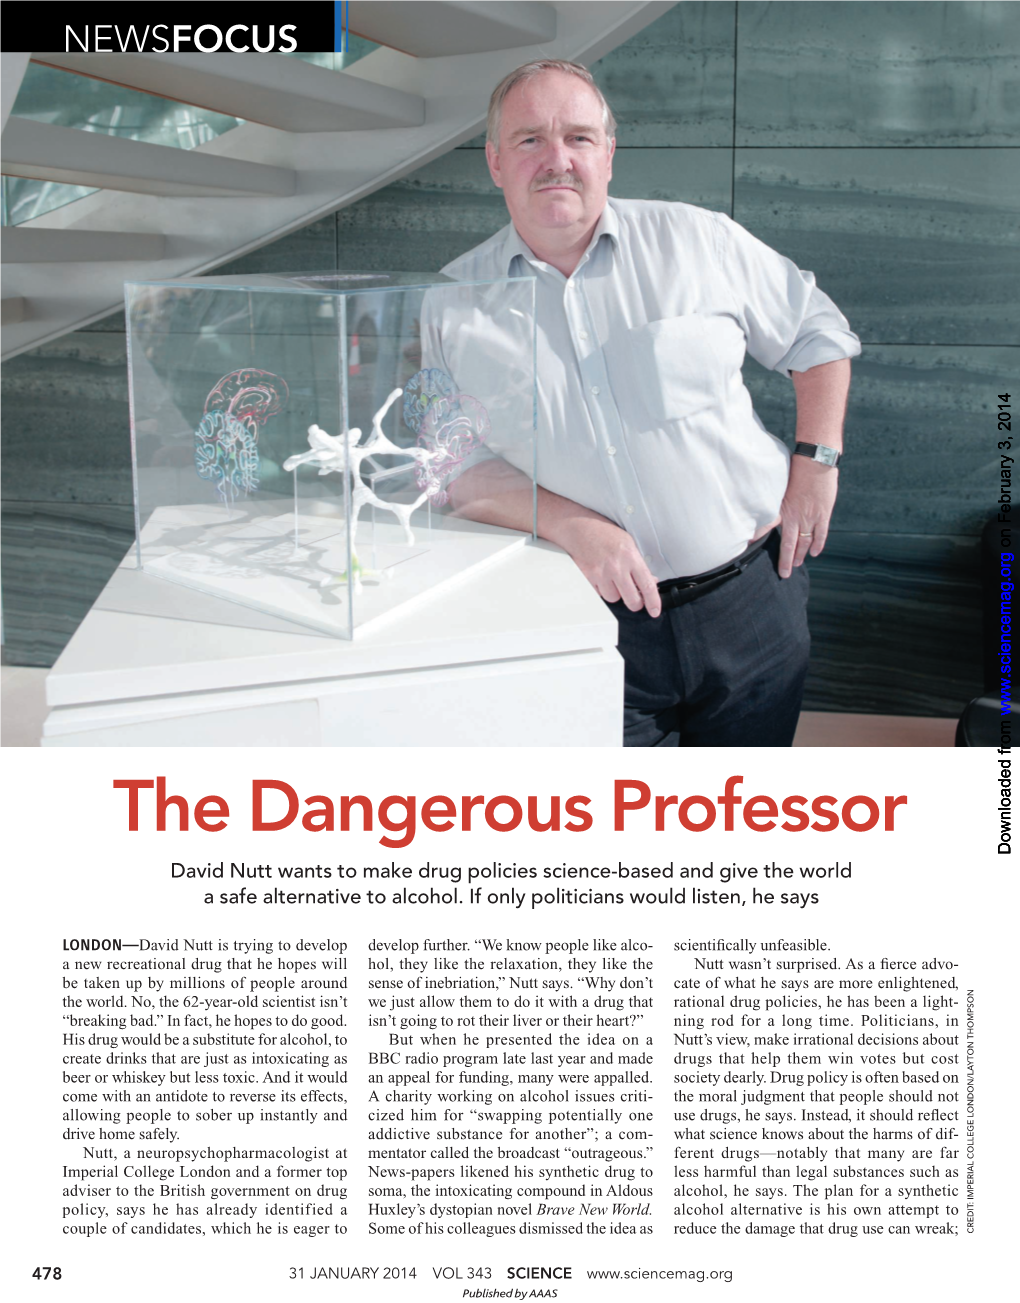 The Dangerous Professor: Interview with David Nutt